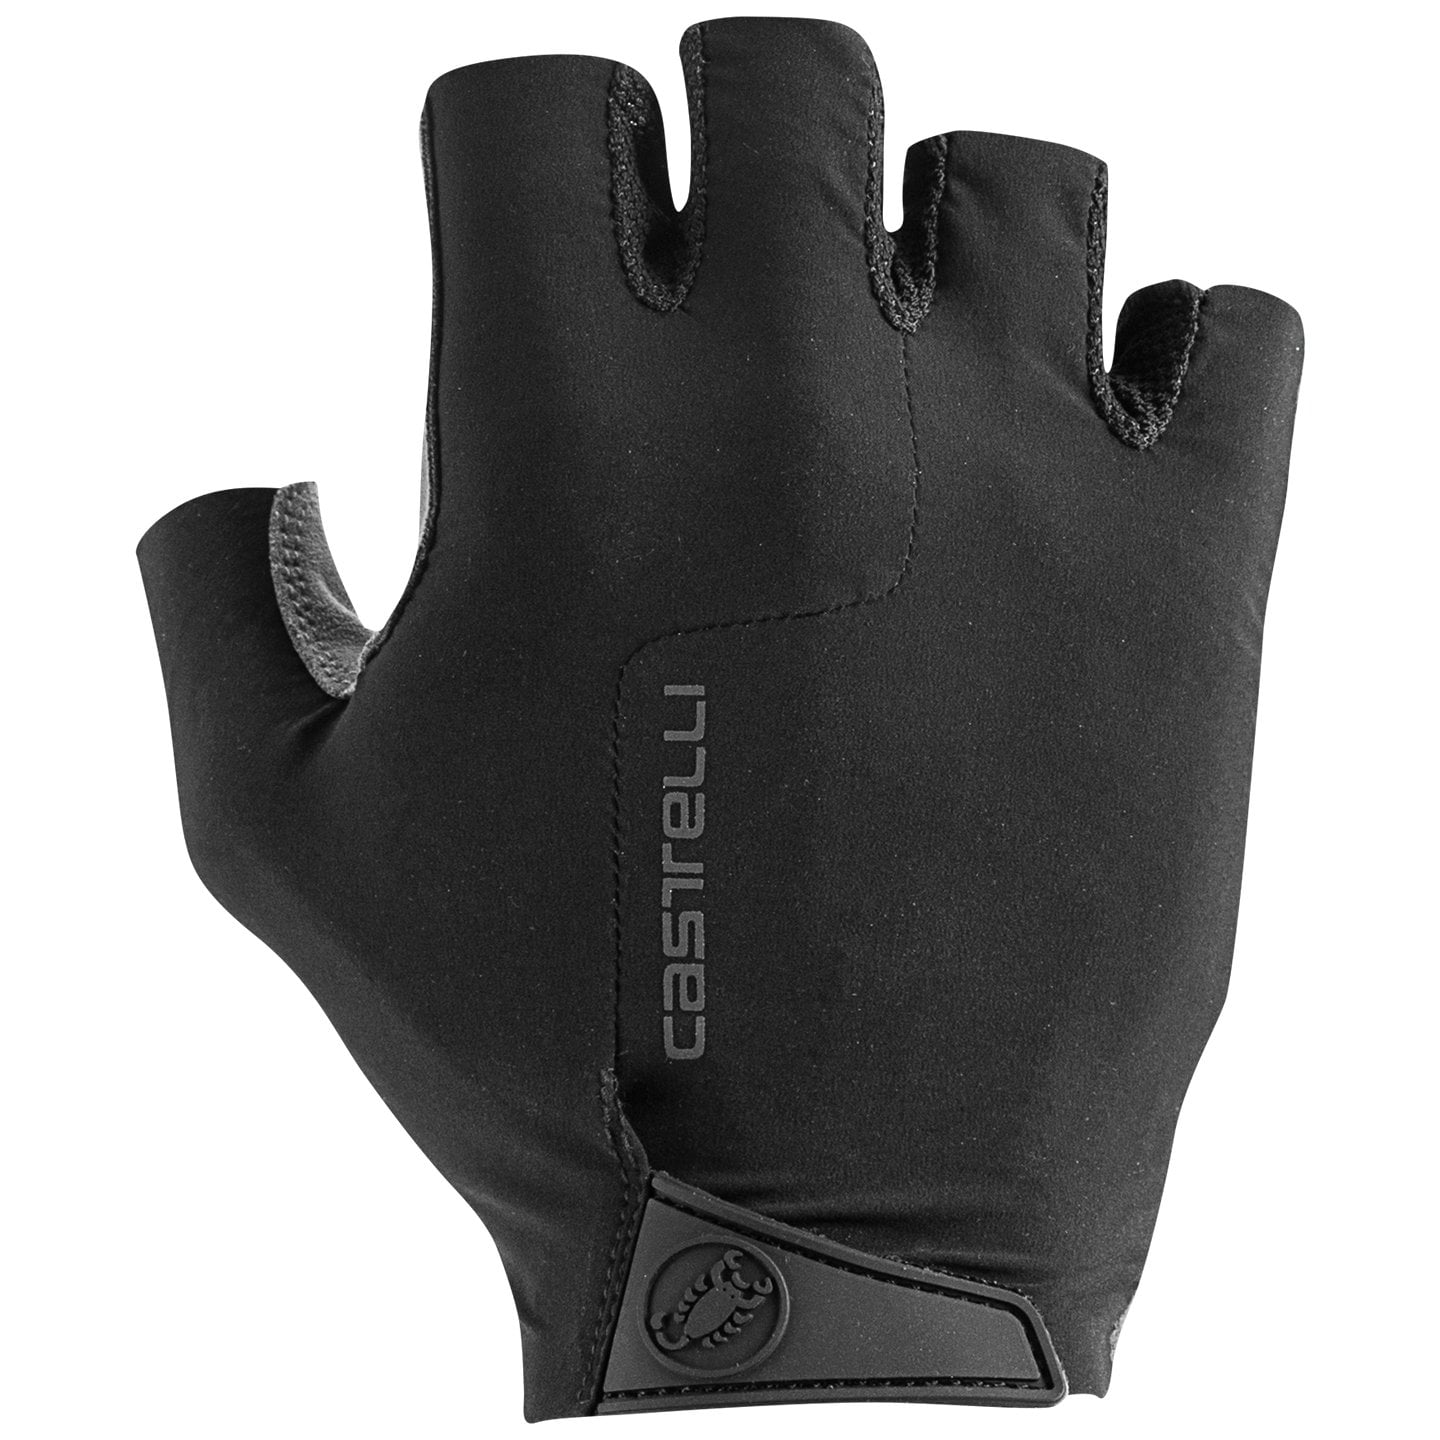 CASTELLI Premio Gloves Cycling Gloves, for men, size M, Cycling gloves, Cycling gear